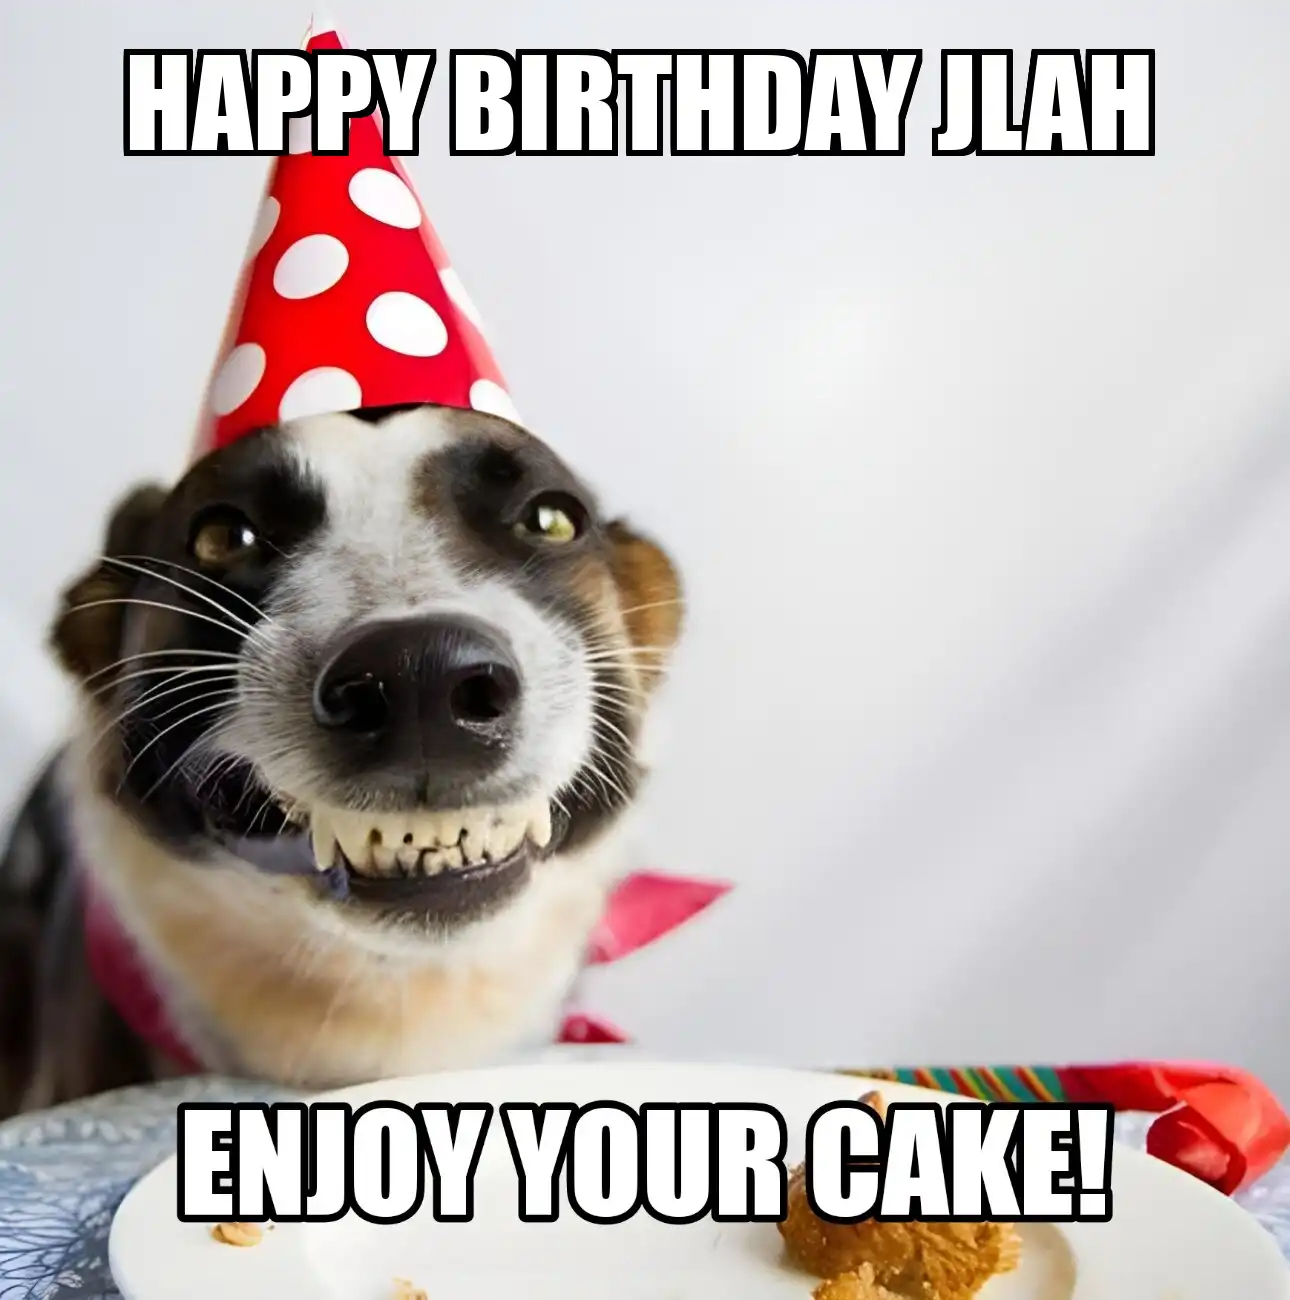 Happy Birthday Jlah Enjoy Your Cake Dog Meme